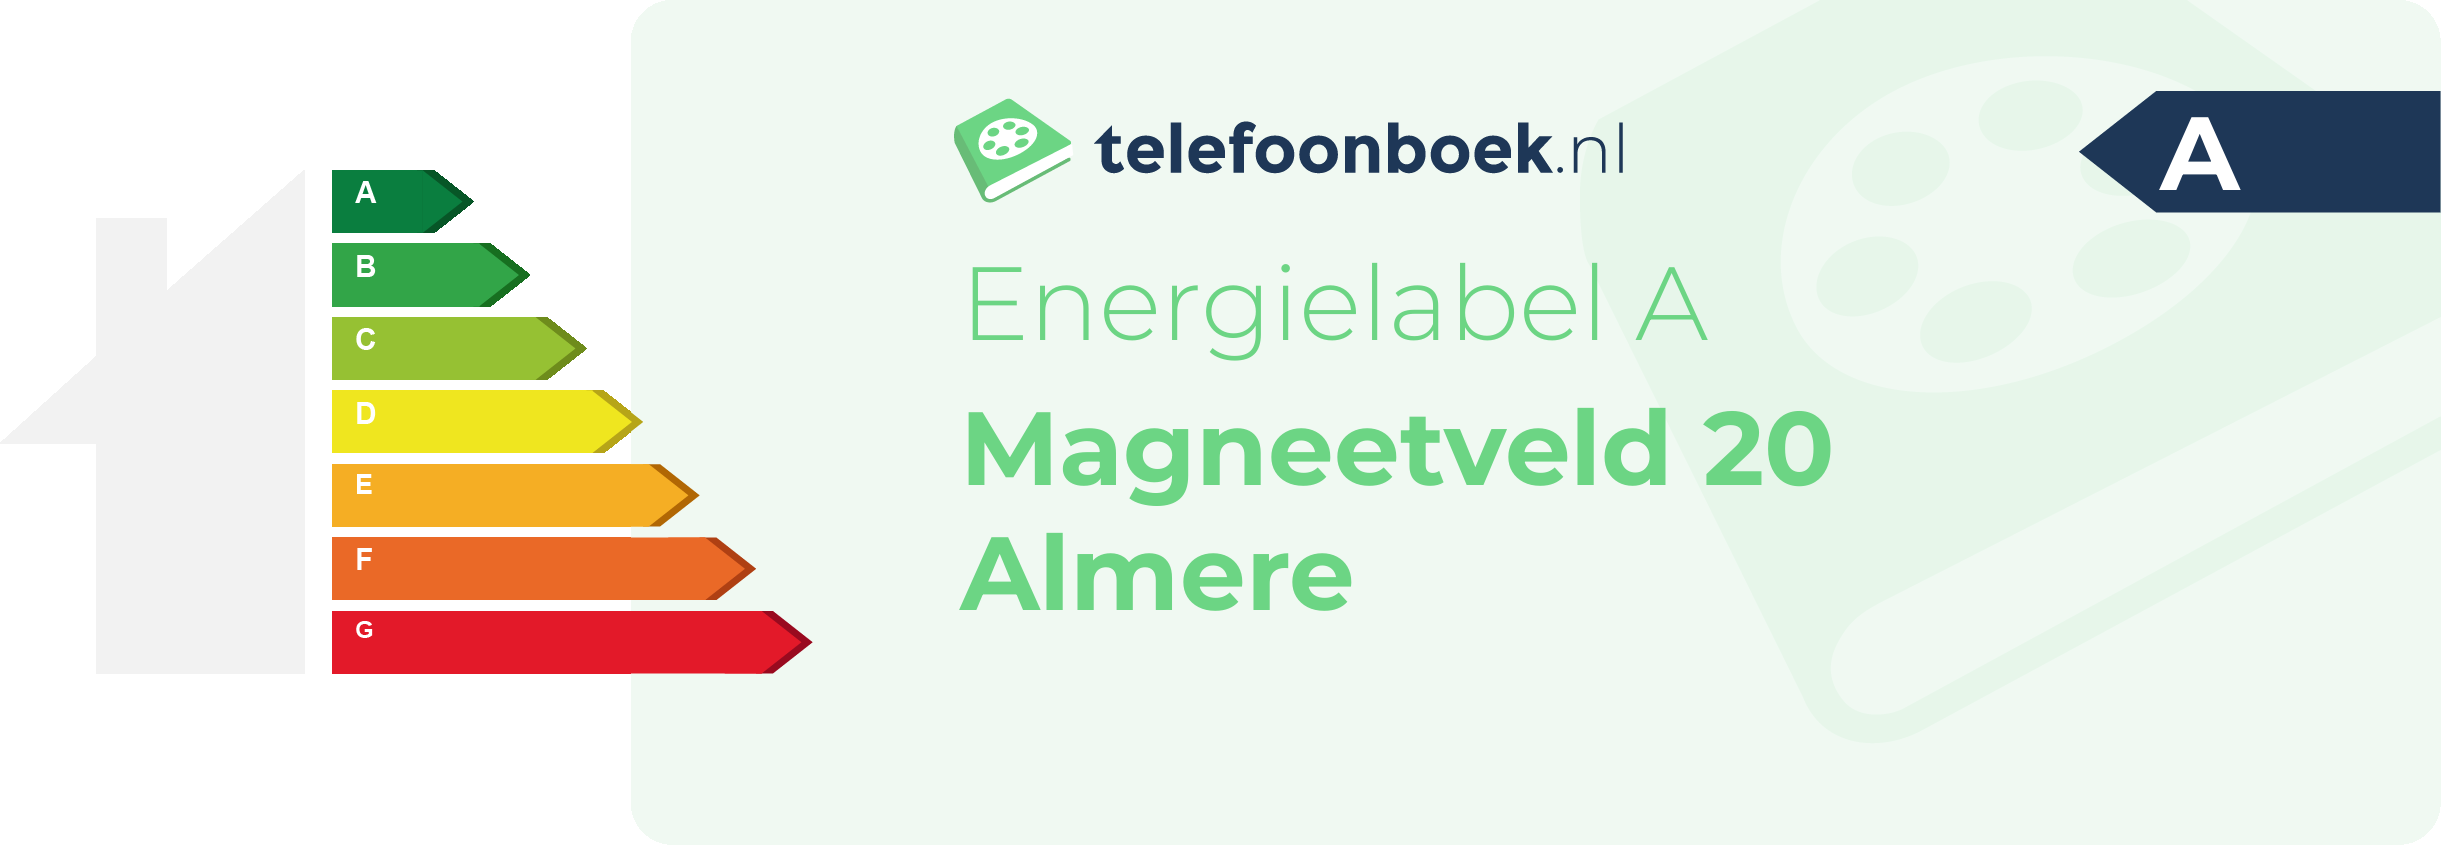 Energielabel Magneetveld 20 Almere